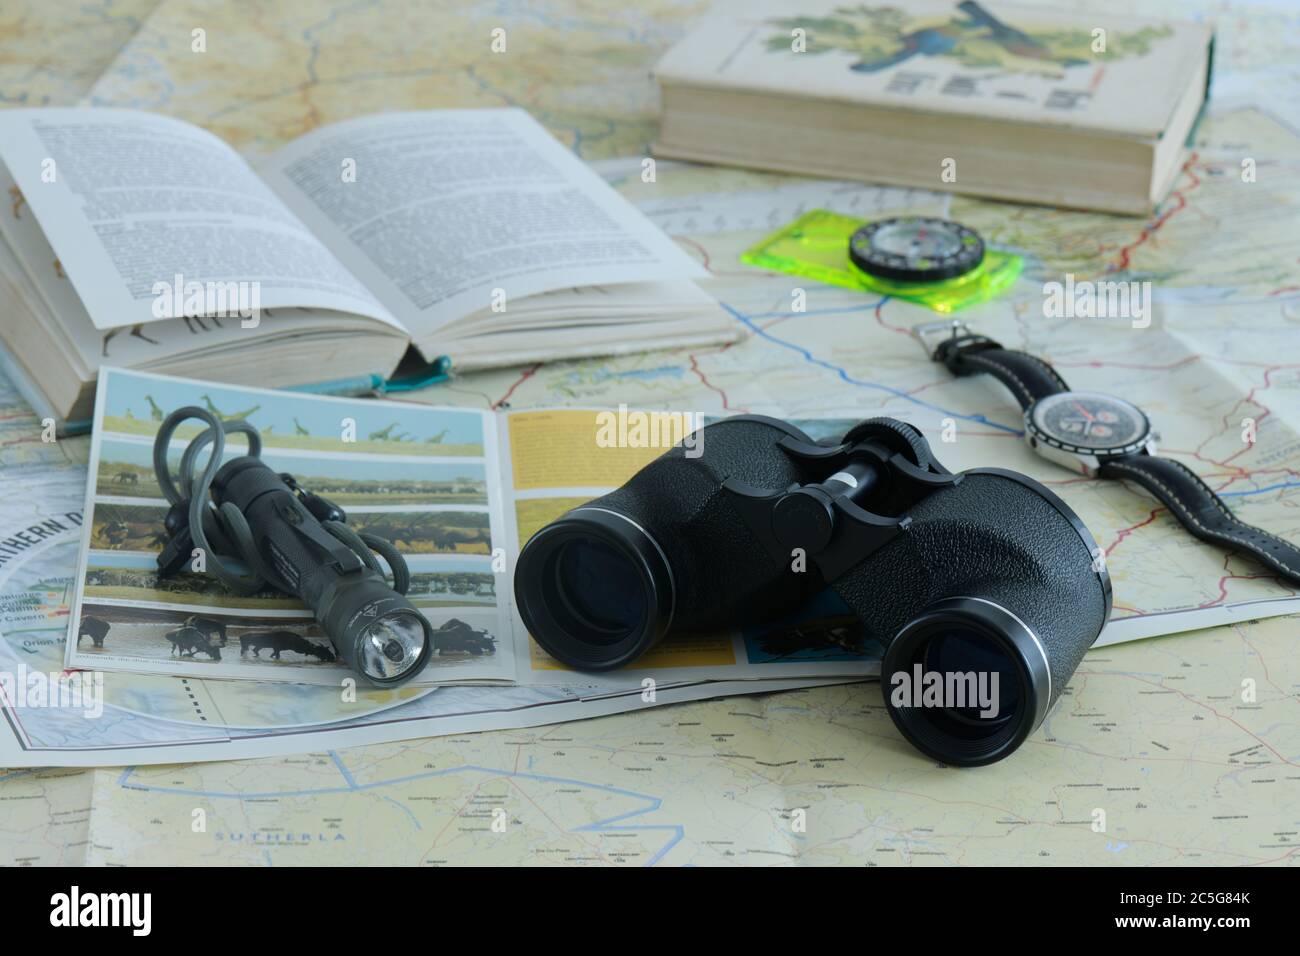 Planning travel adventure, concept illustration, safari, books, binoculars, watch, flashlight, maps, close up, objects, strategy, preparation, plan Stock Photo